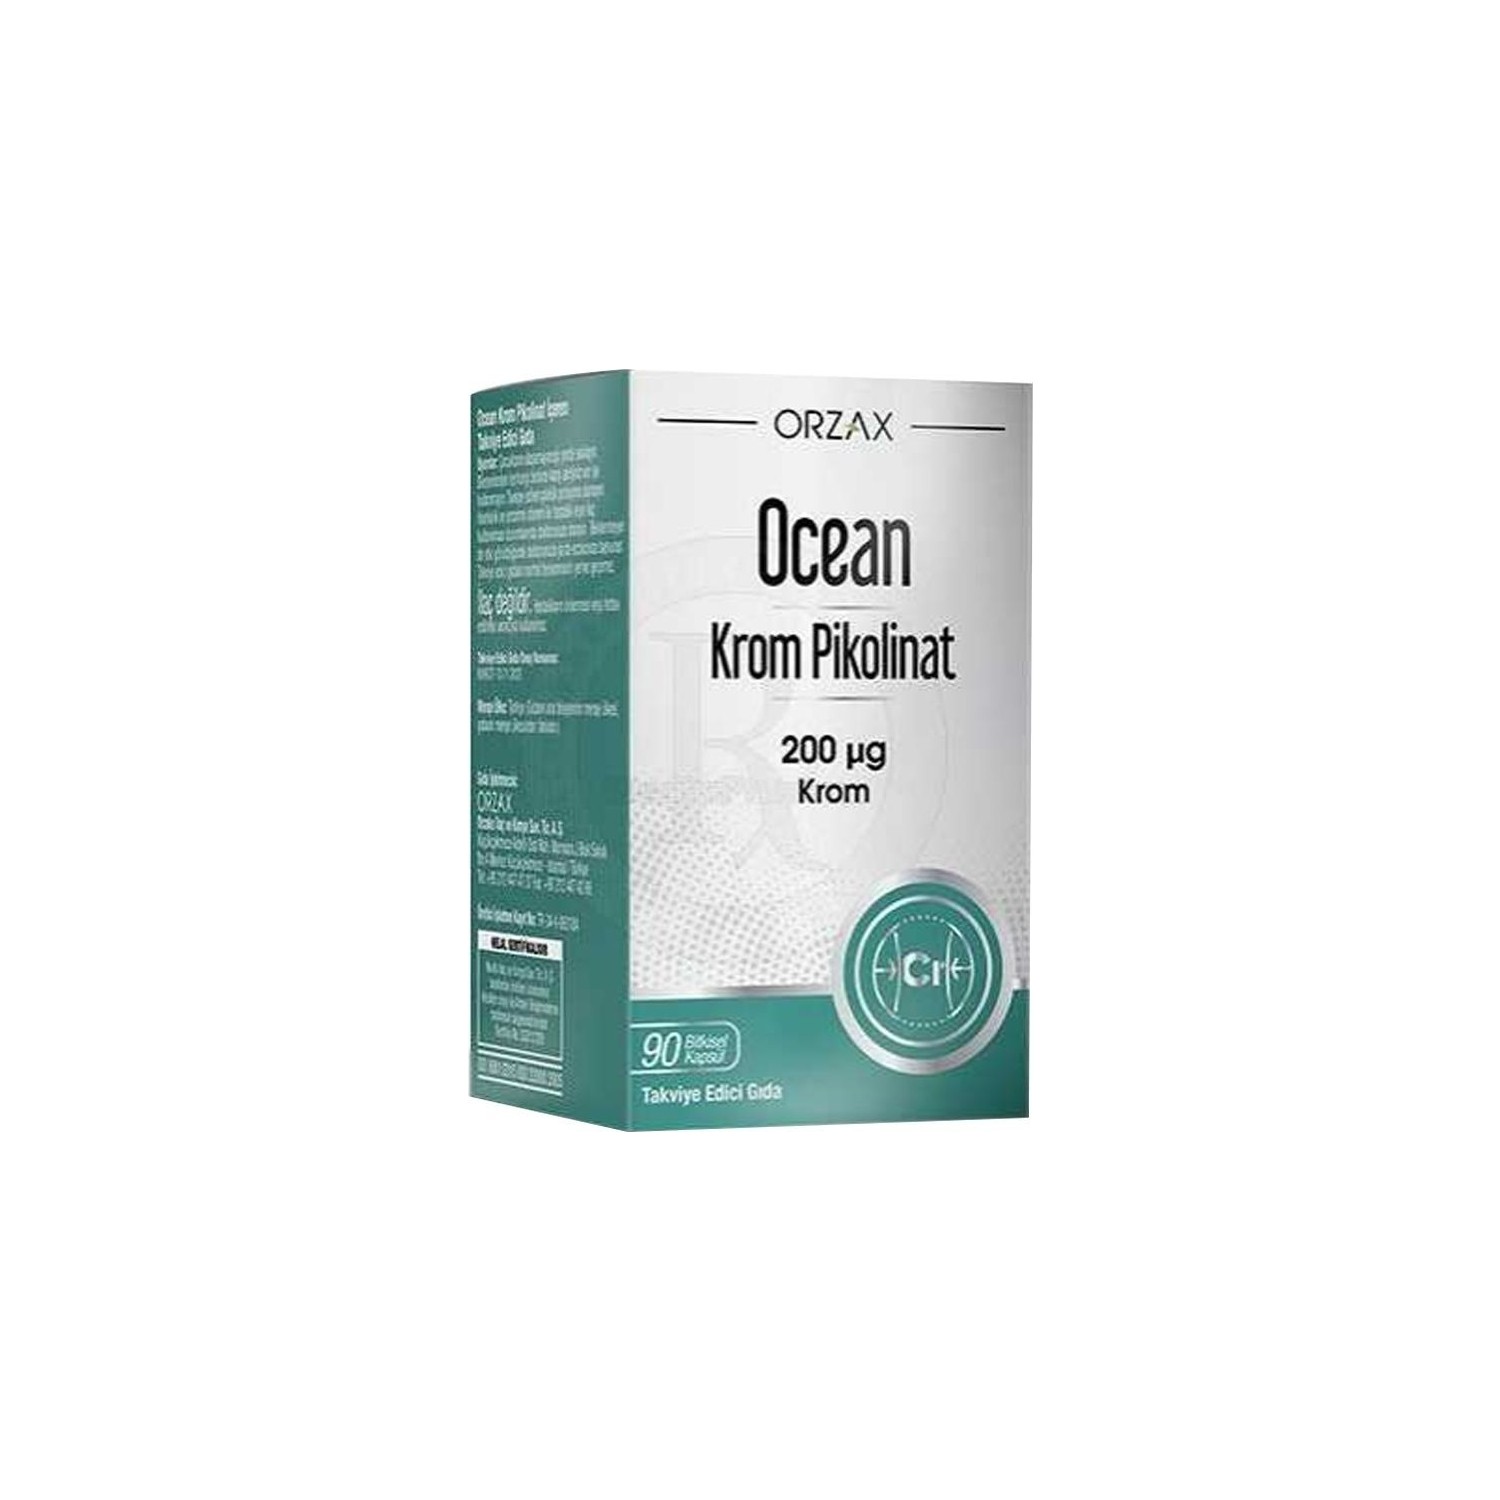 Пиколинат хрома Ocean Orzax 20 мкг, 90 капсул пищевая добавка orzax ocean mk 7 vitamin к2 100 мкг 30 капсул